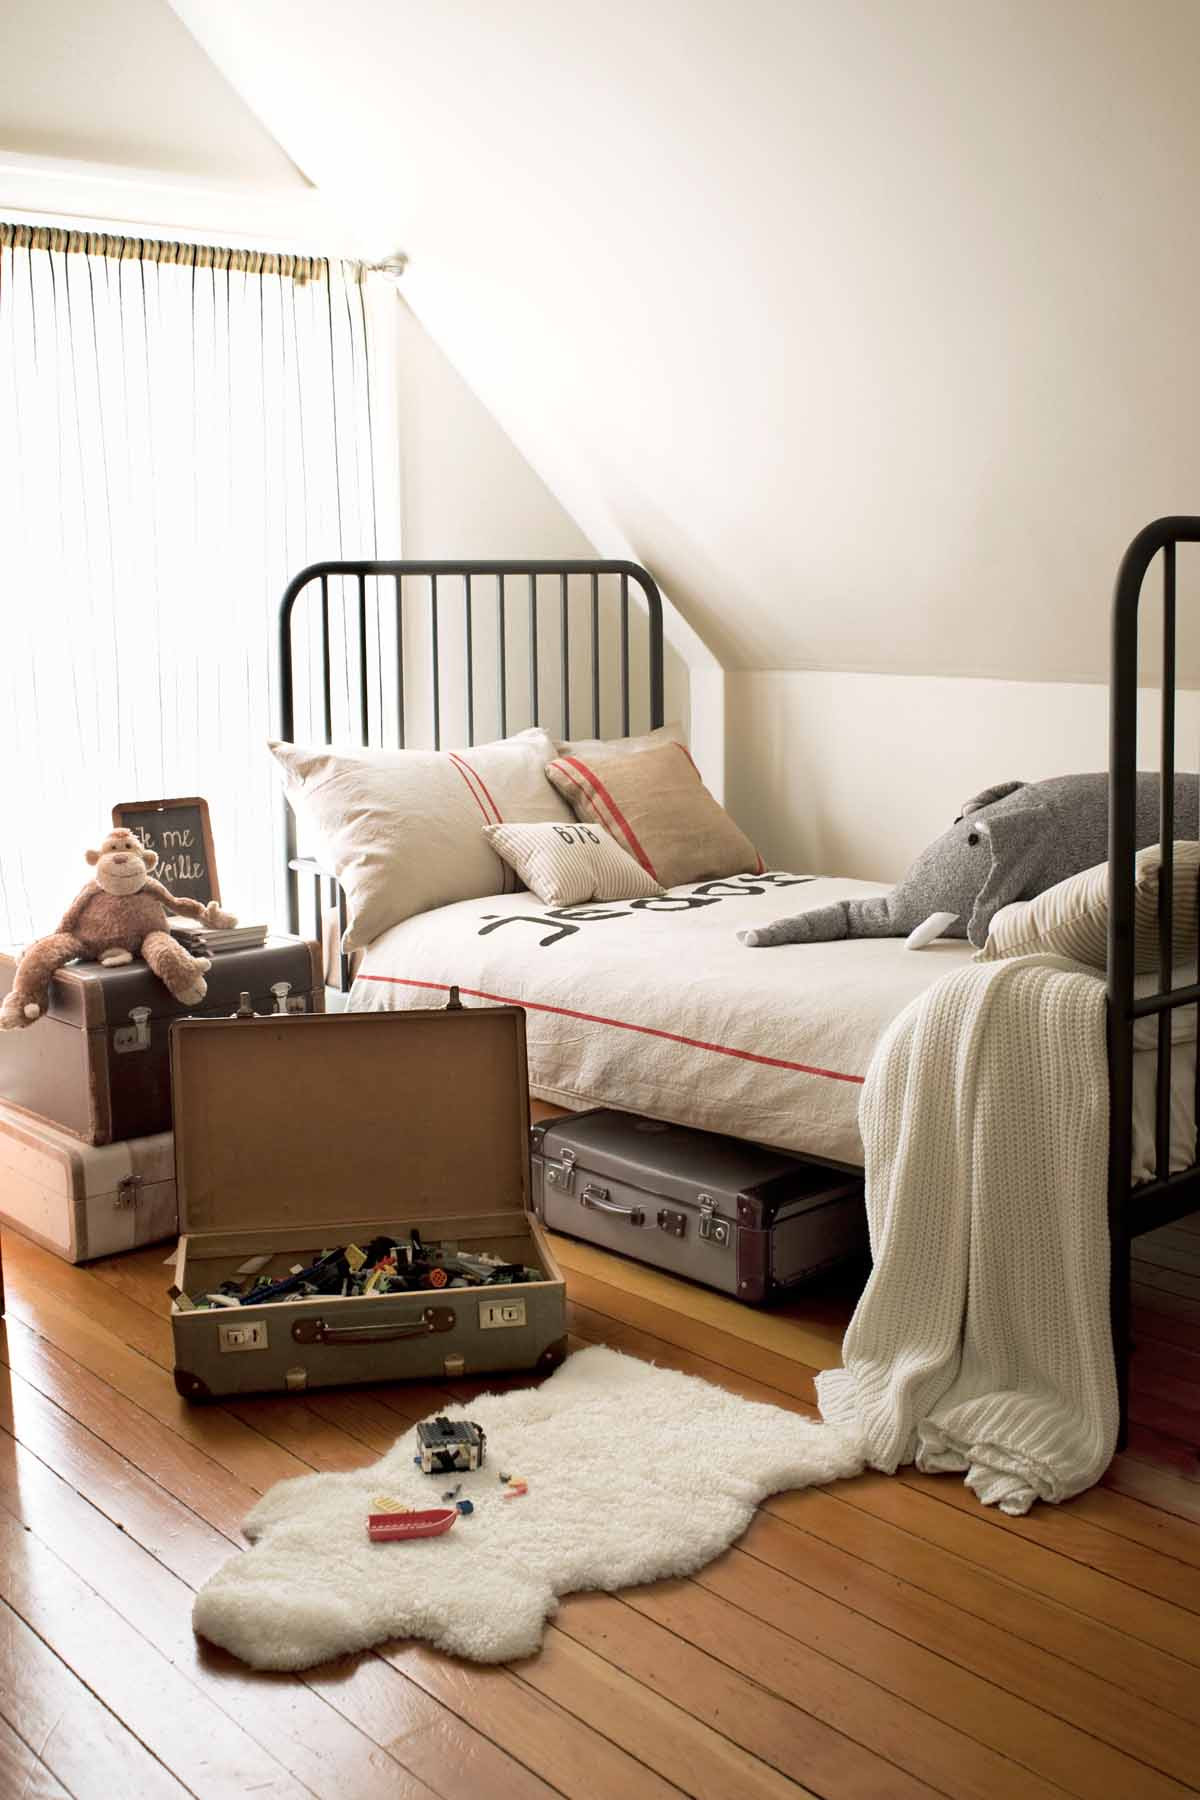 Boy Bedroom Ideas
 14 Best Boys Bedroom Ideas Room Decor and Themes for a